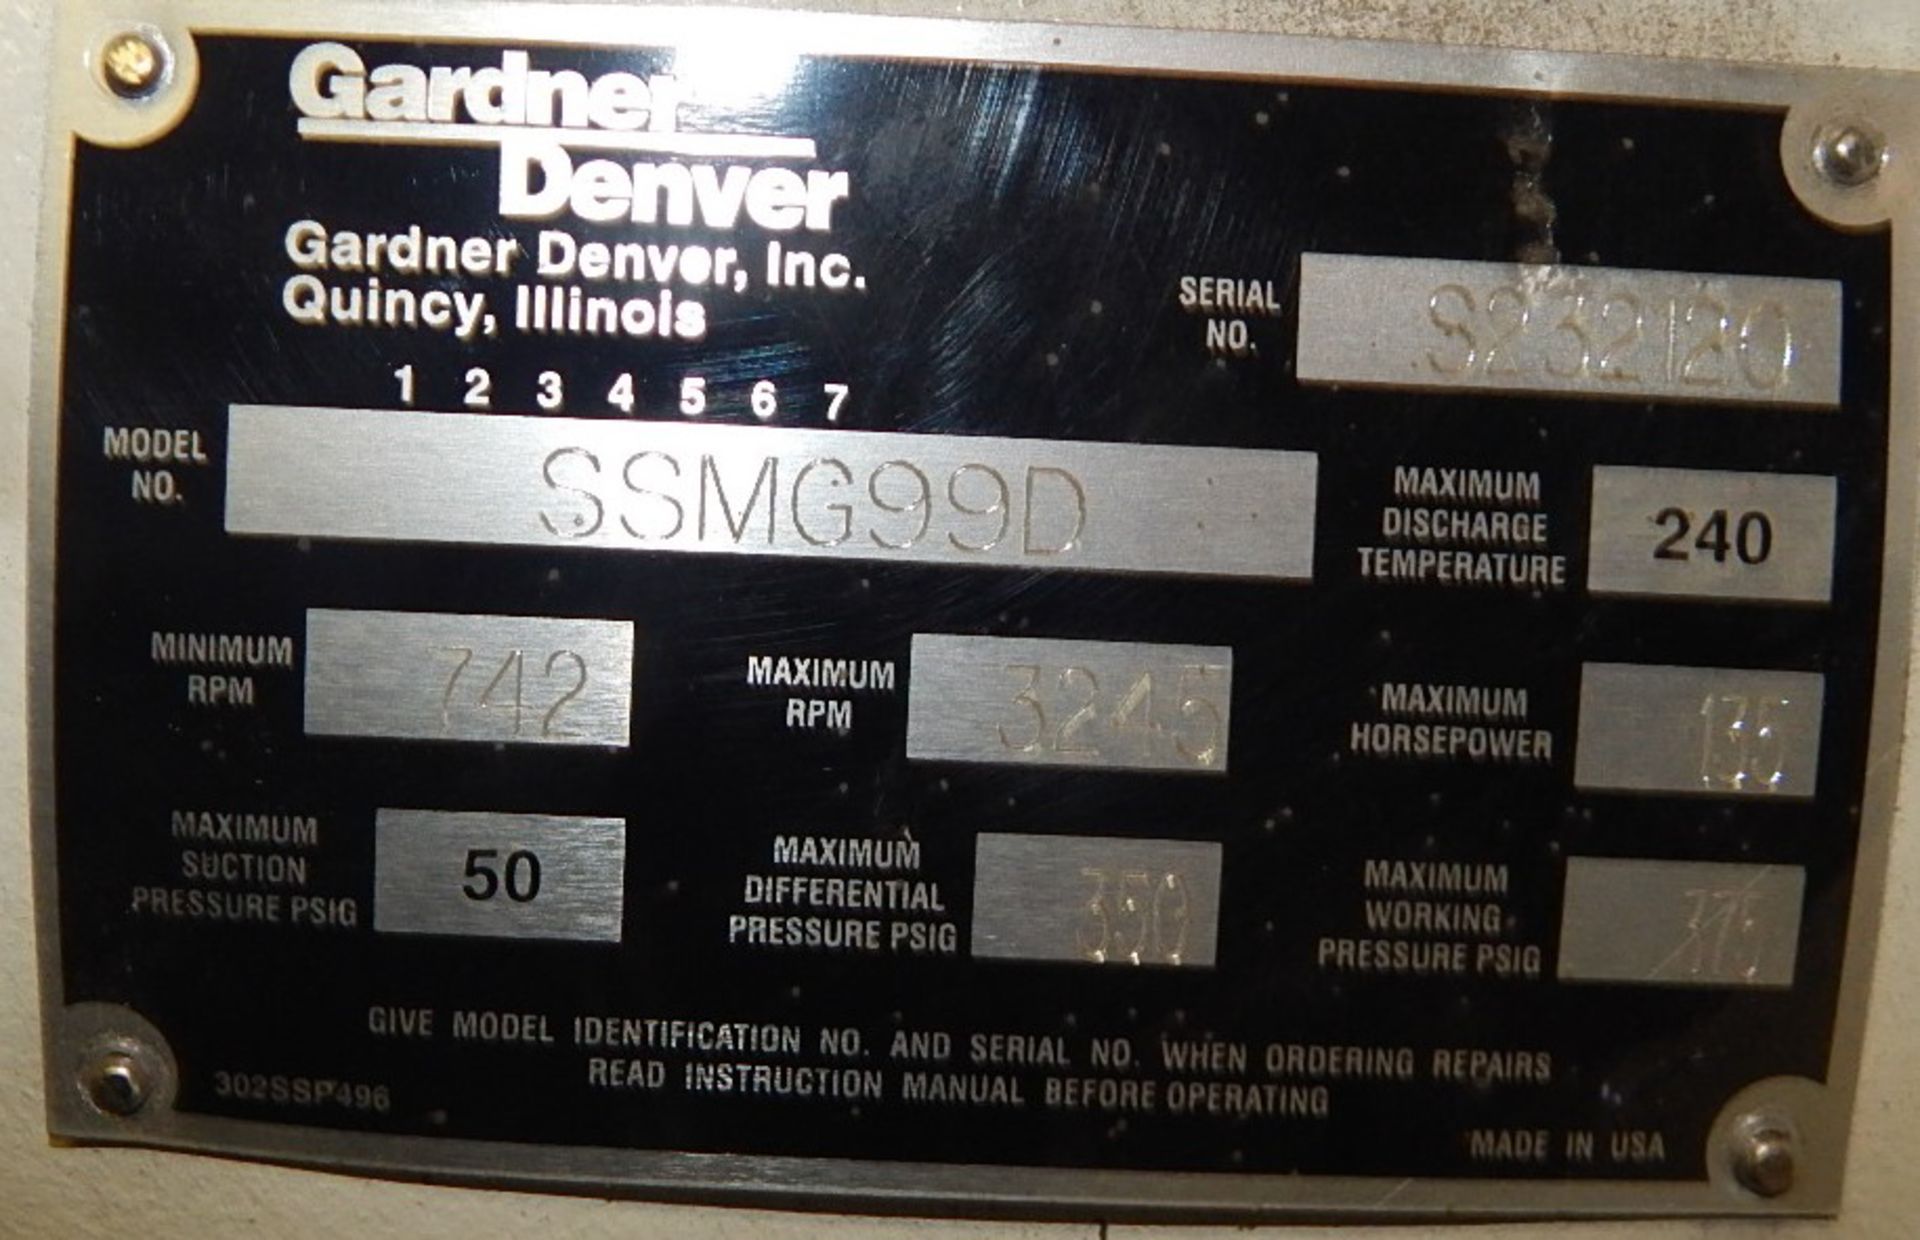 GARDNER DENVER SSMG99D GAS SCREW COMPRESSOR WITH 135 HP, 3245 MAX. RPM, 375 PSI (CI) [SKU 2016] ( - Image 4 of 4